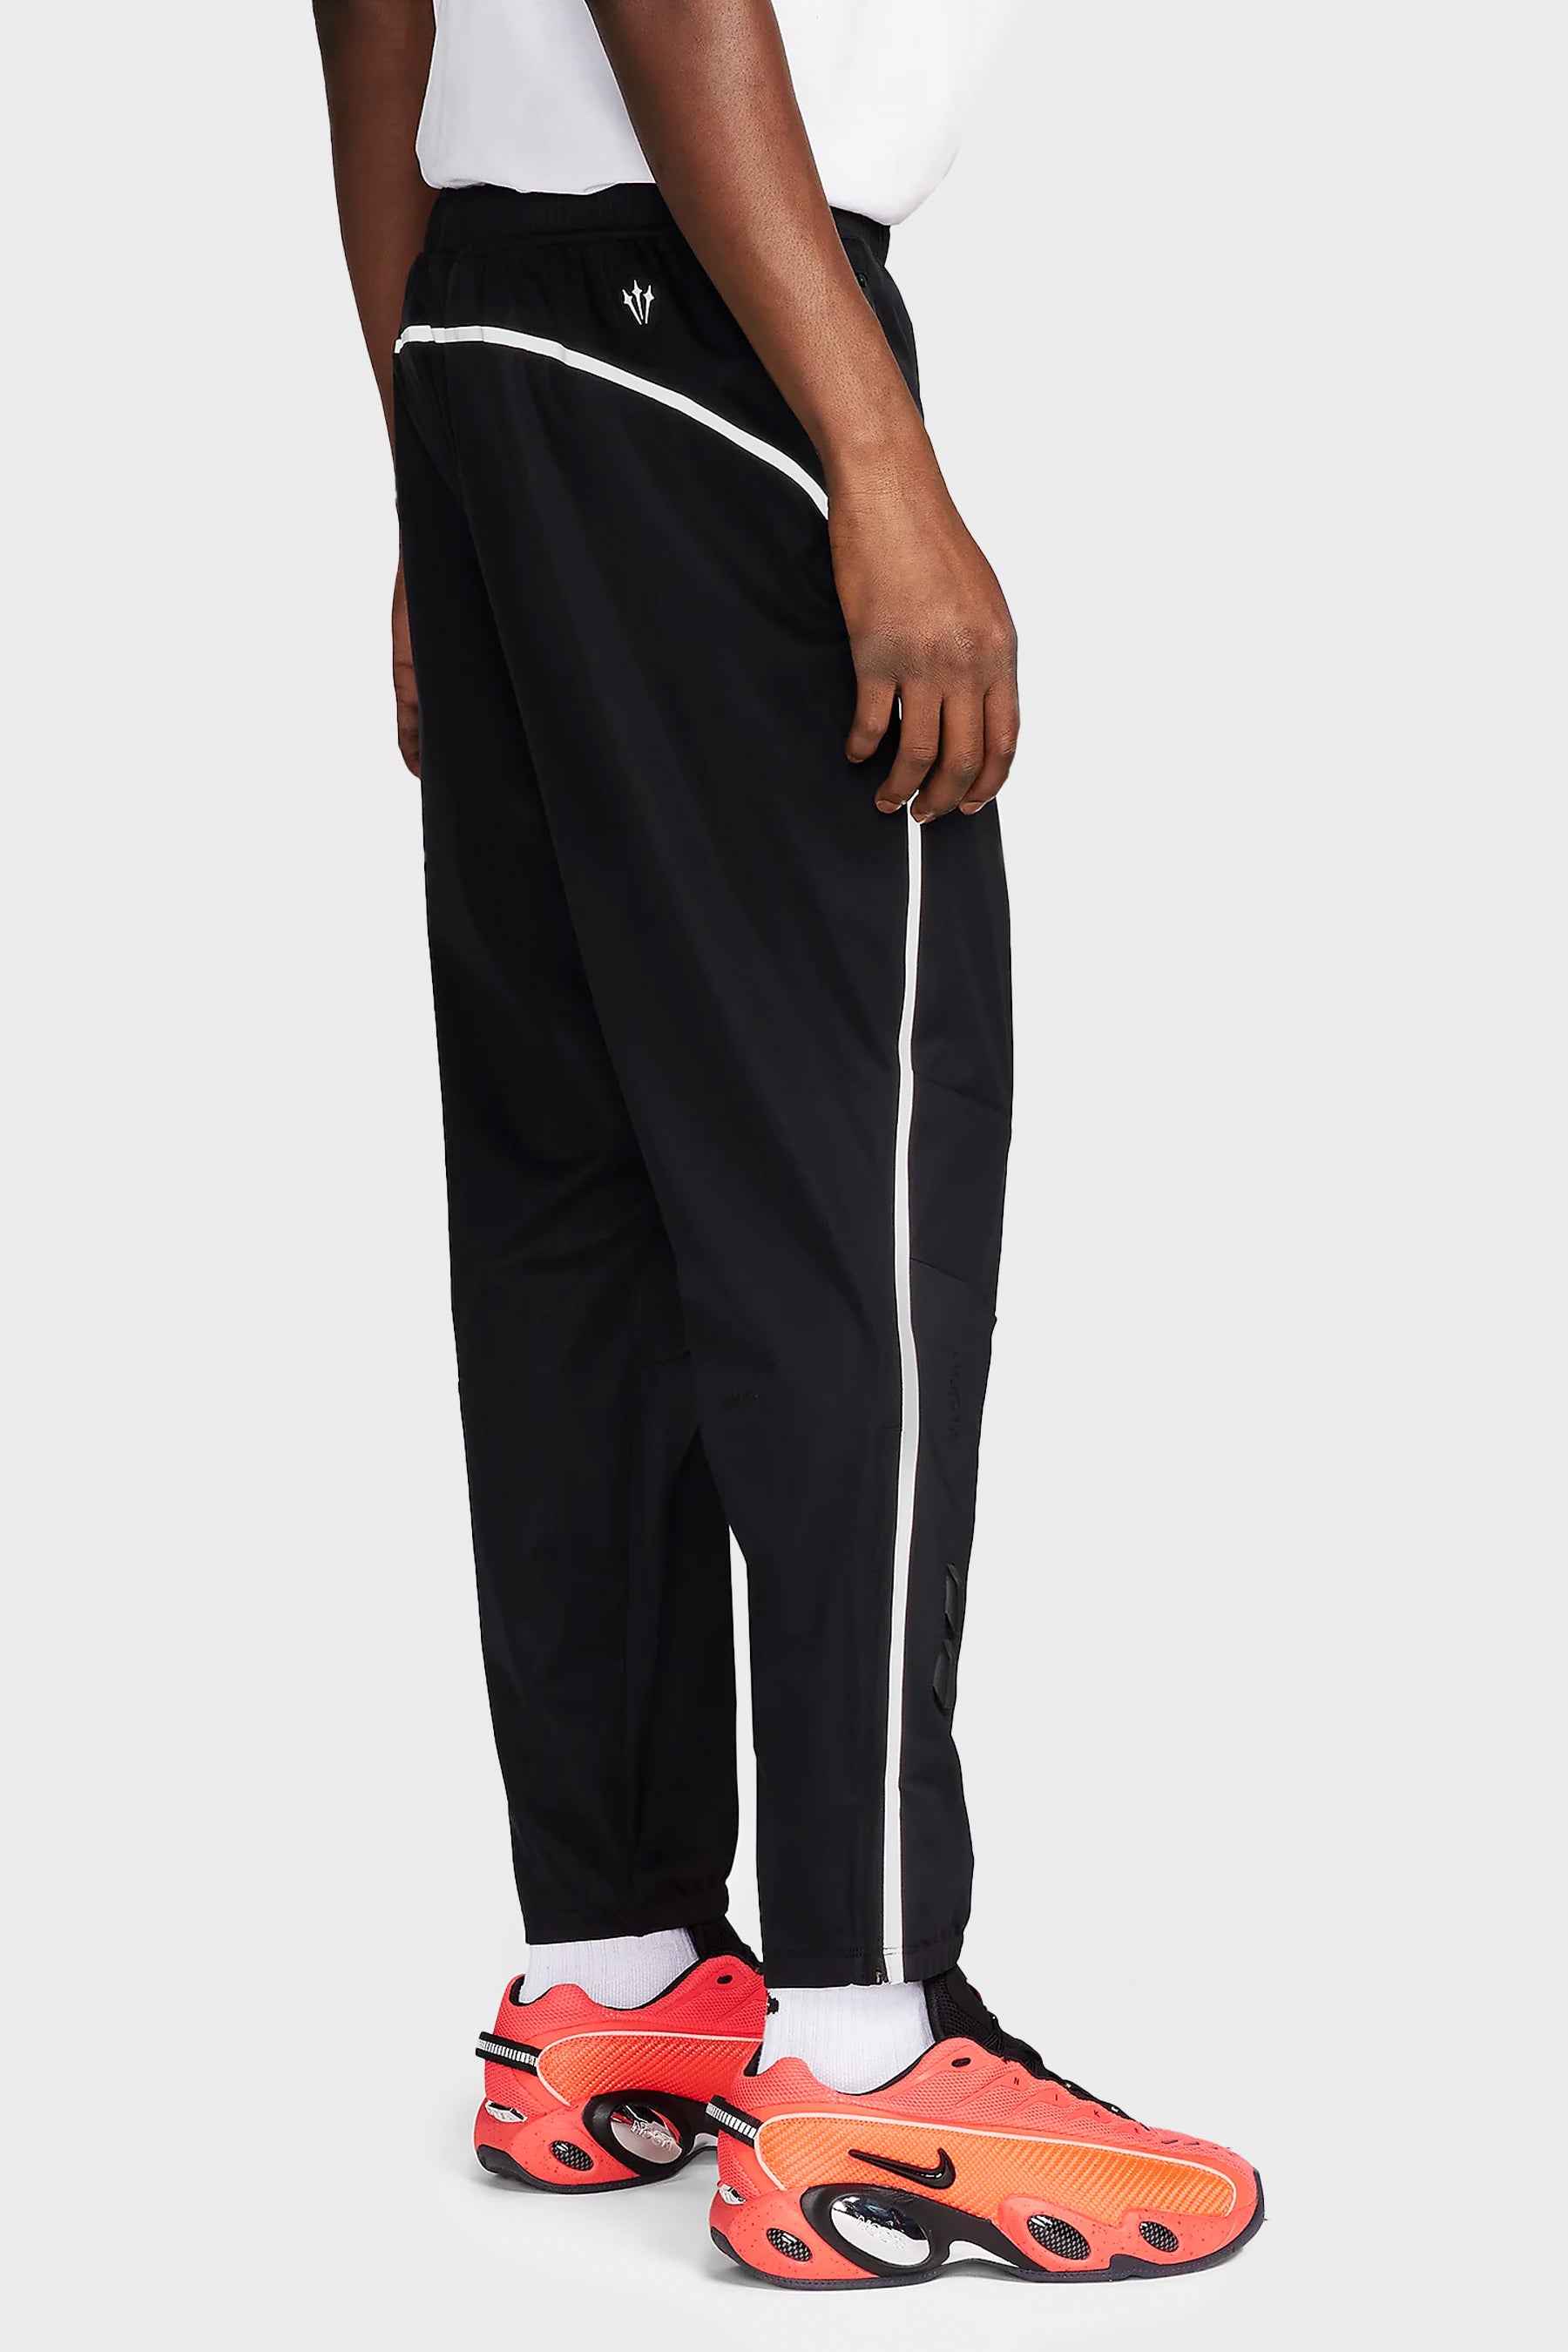 Nike x NOCTA Summit Pant Black